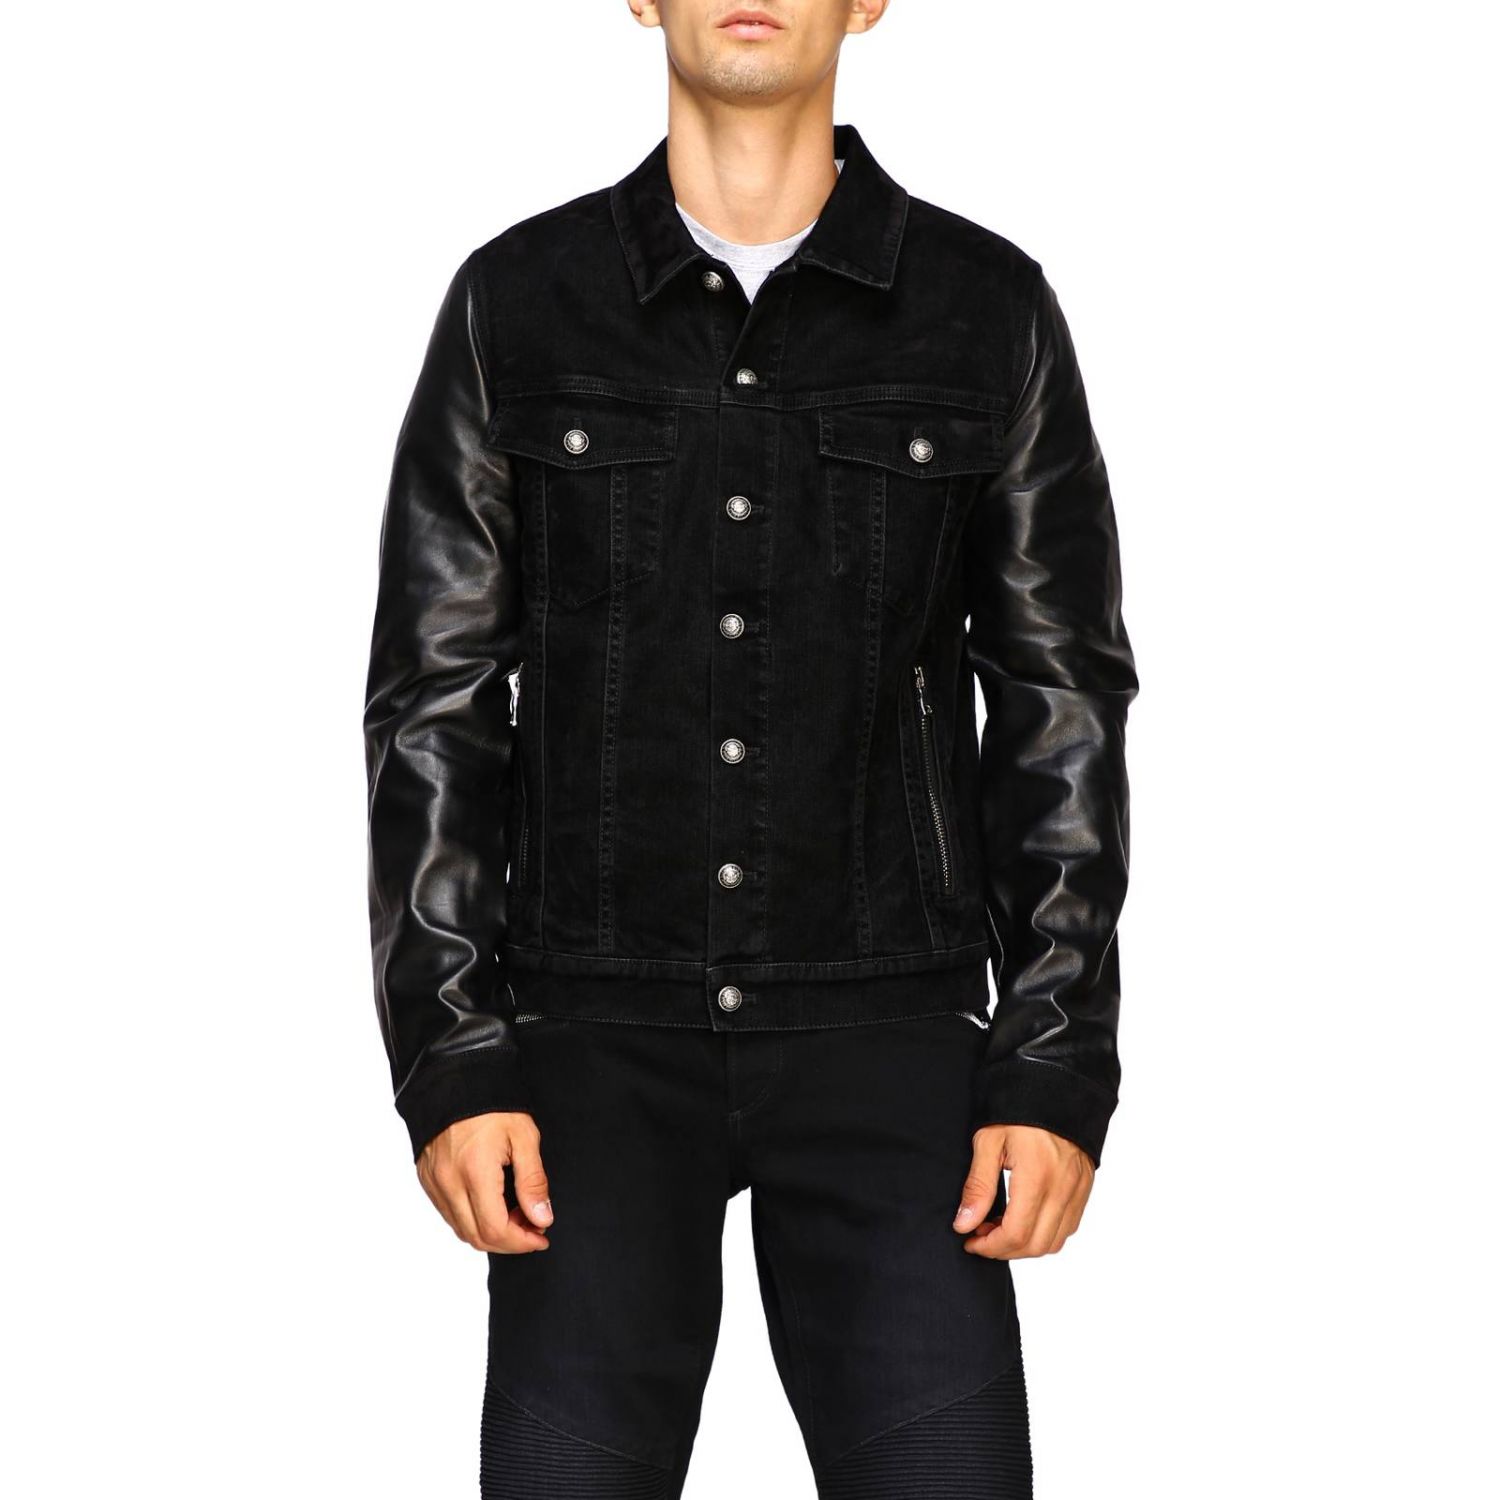 Balmain Outlet: Denim jacket with leather sleeves and | Balmain Men Black | Jacket Balmain SH08458Z564 GIGLIO.COM